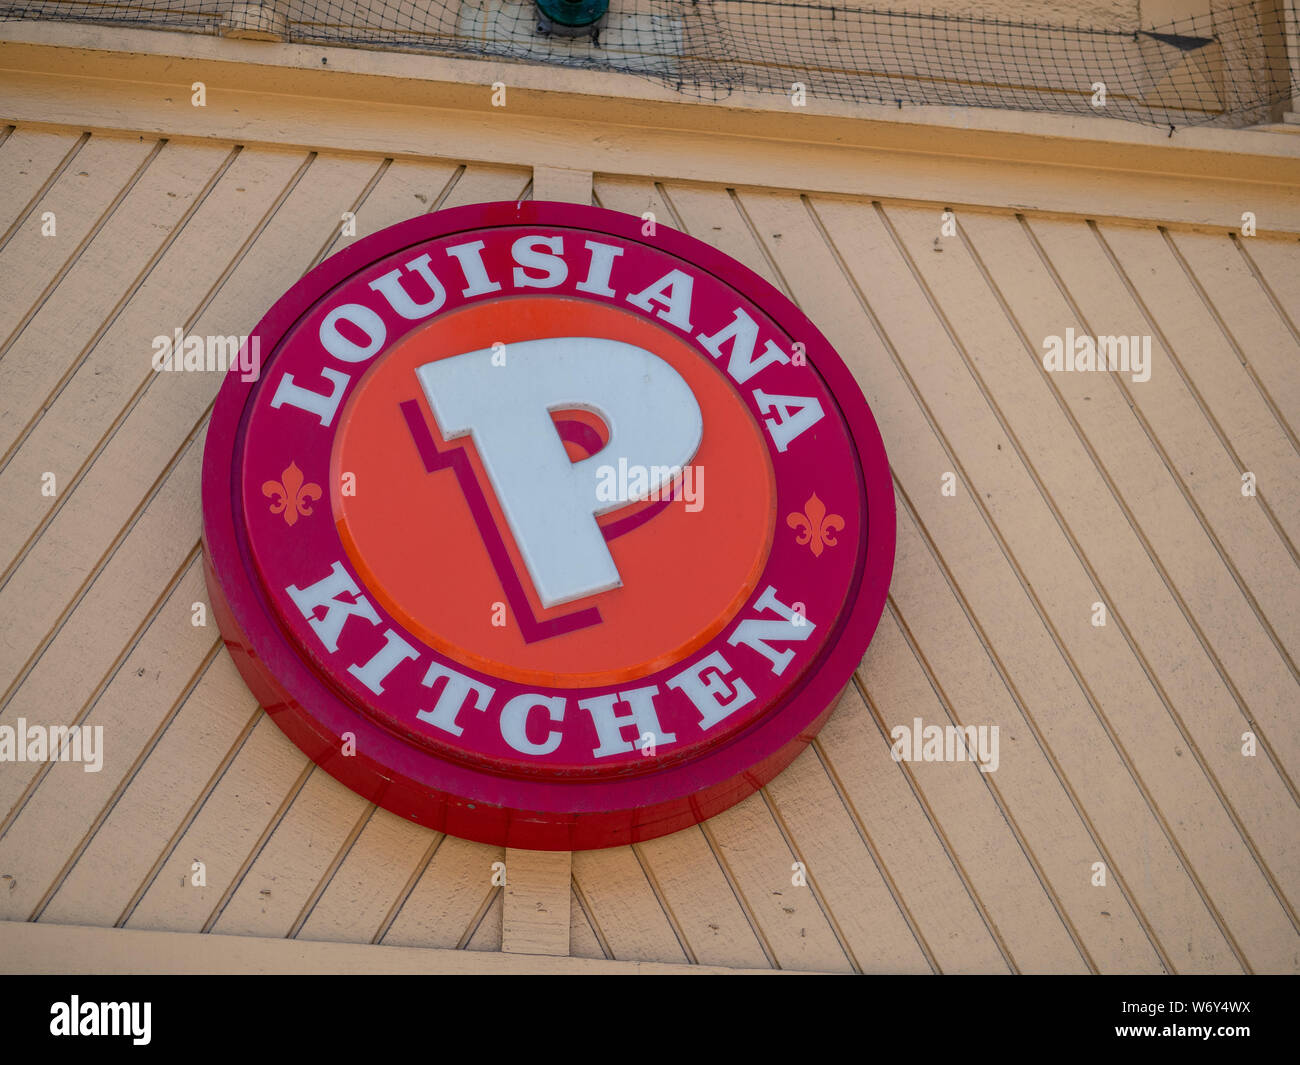 Popeyes Louisiana Chicken fast food restaurant logo on branch location Stock Photo